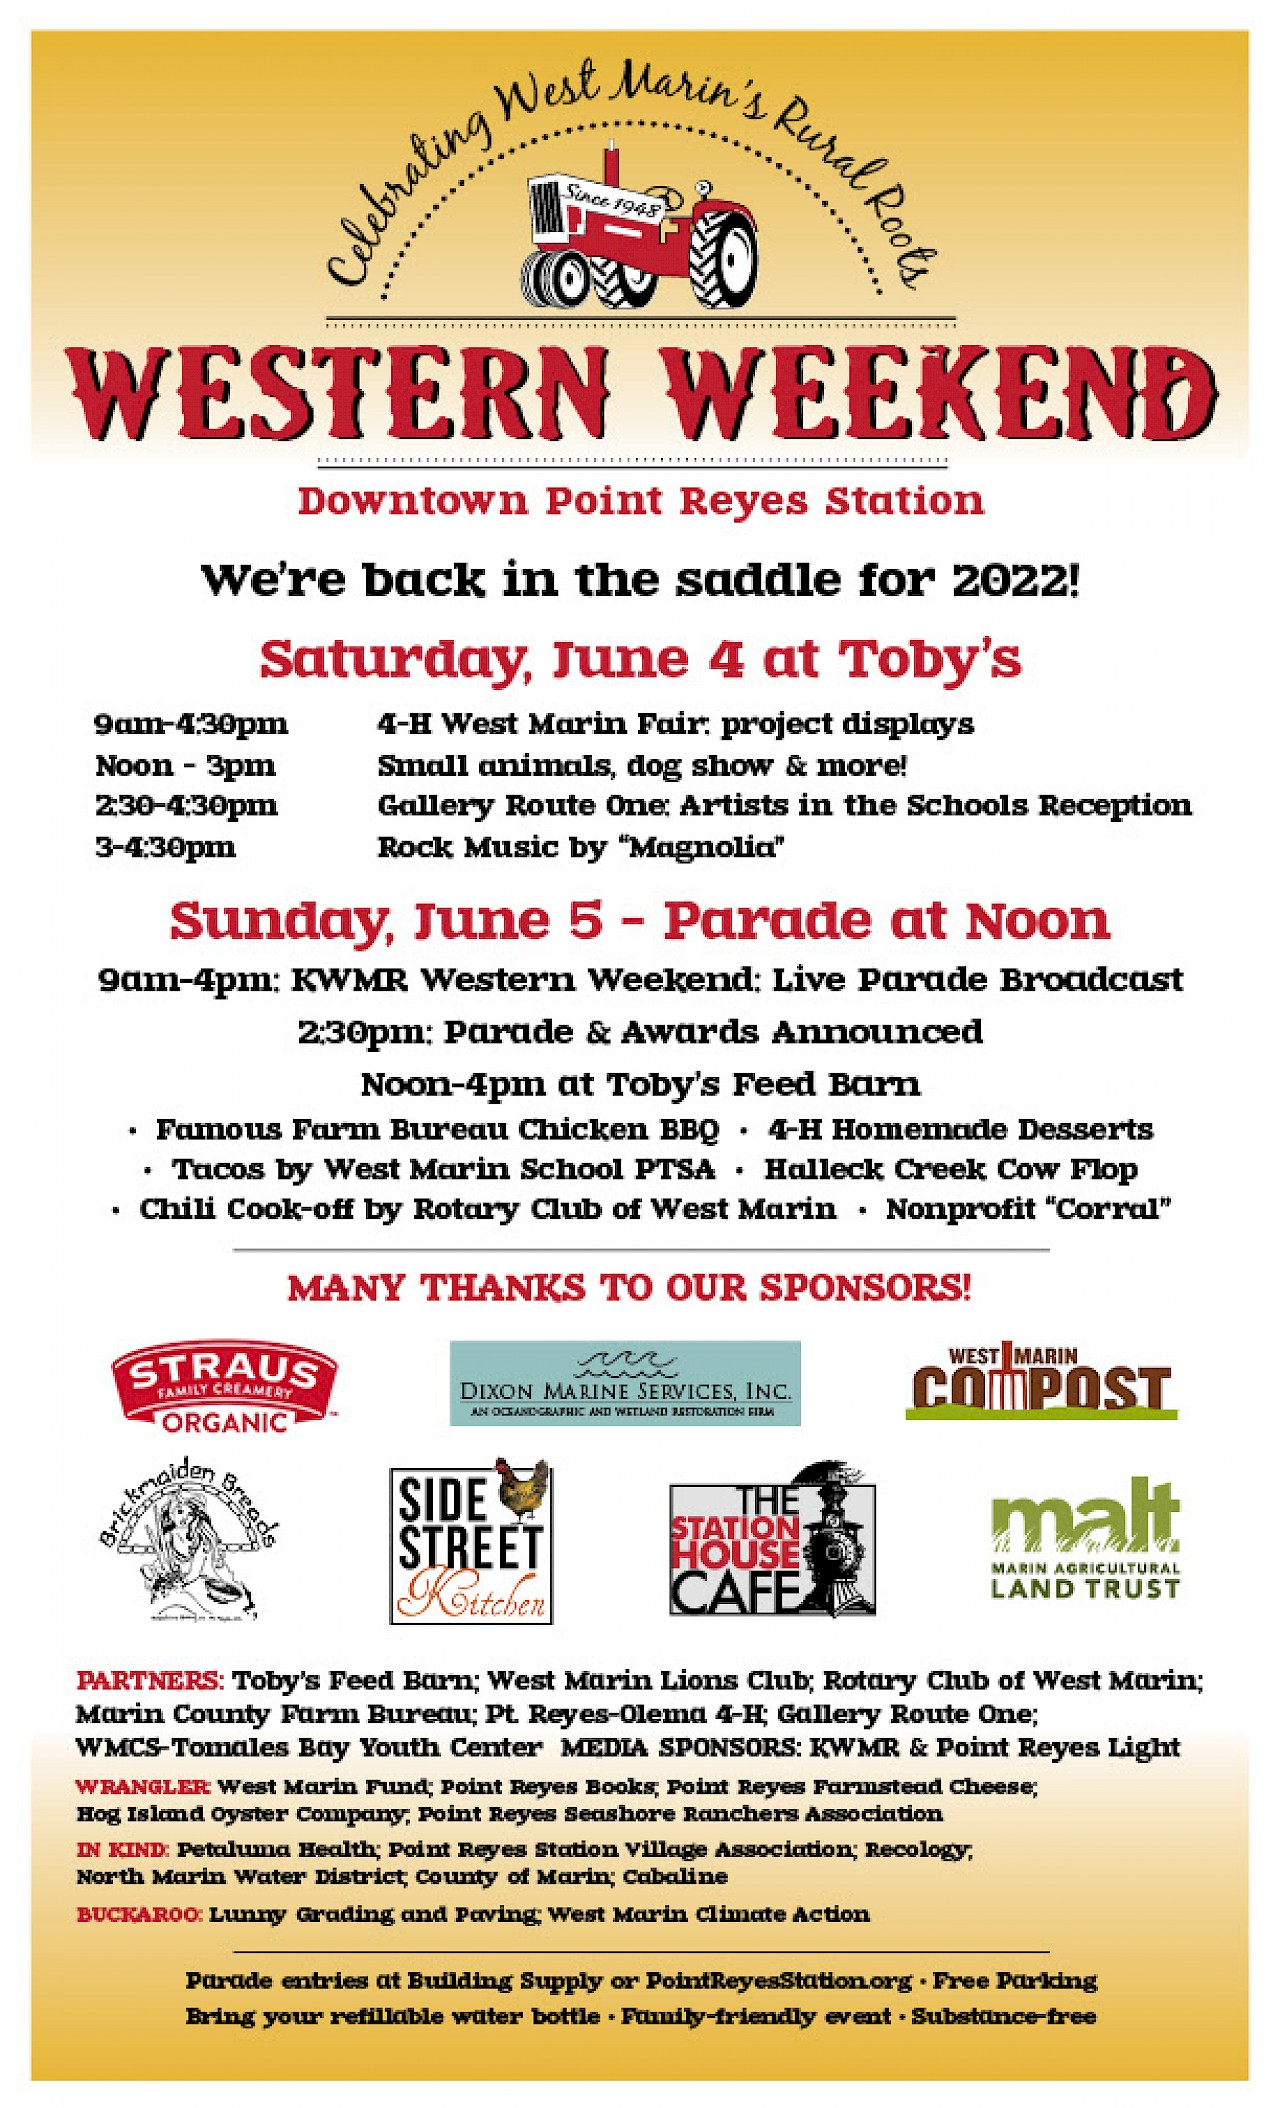 Western Weekend in Downtown Point Reyes Station, June 4 5, 2022